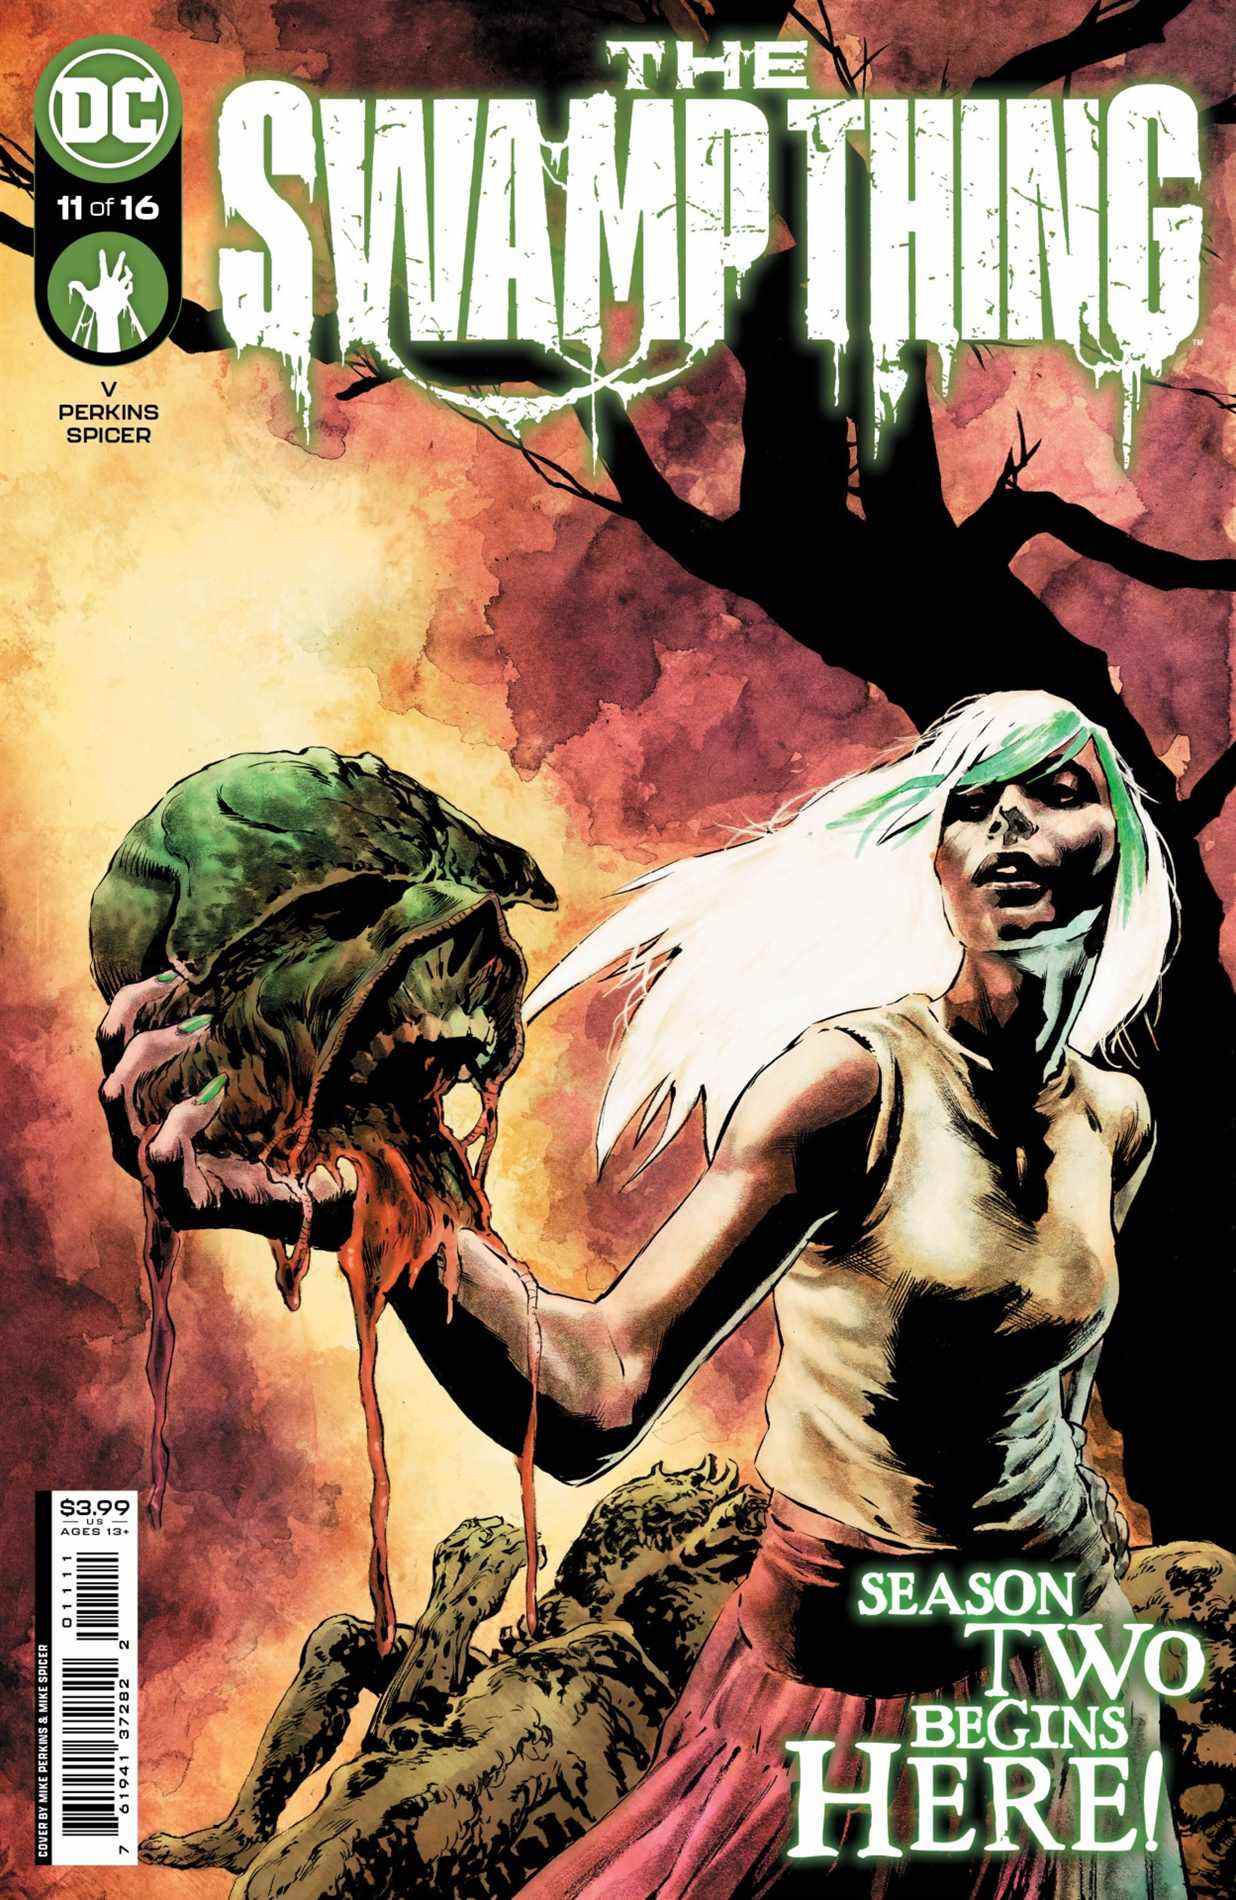 Couverture de The Swamp Thing #11